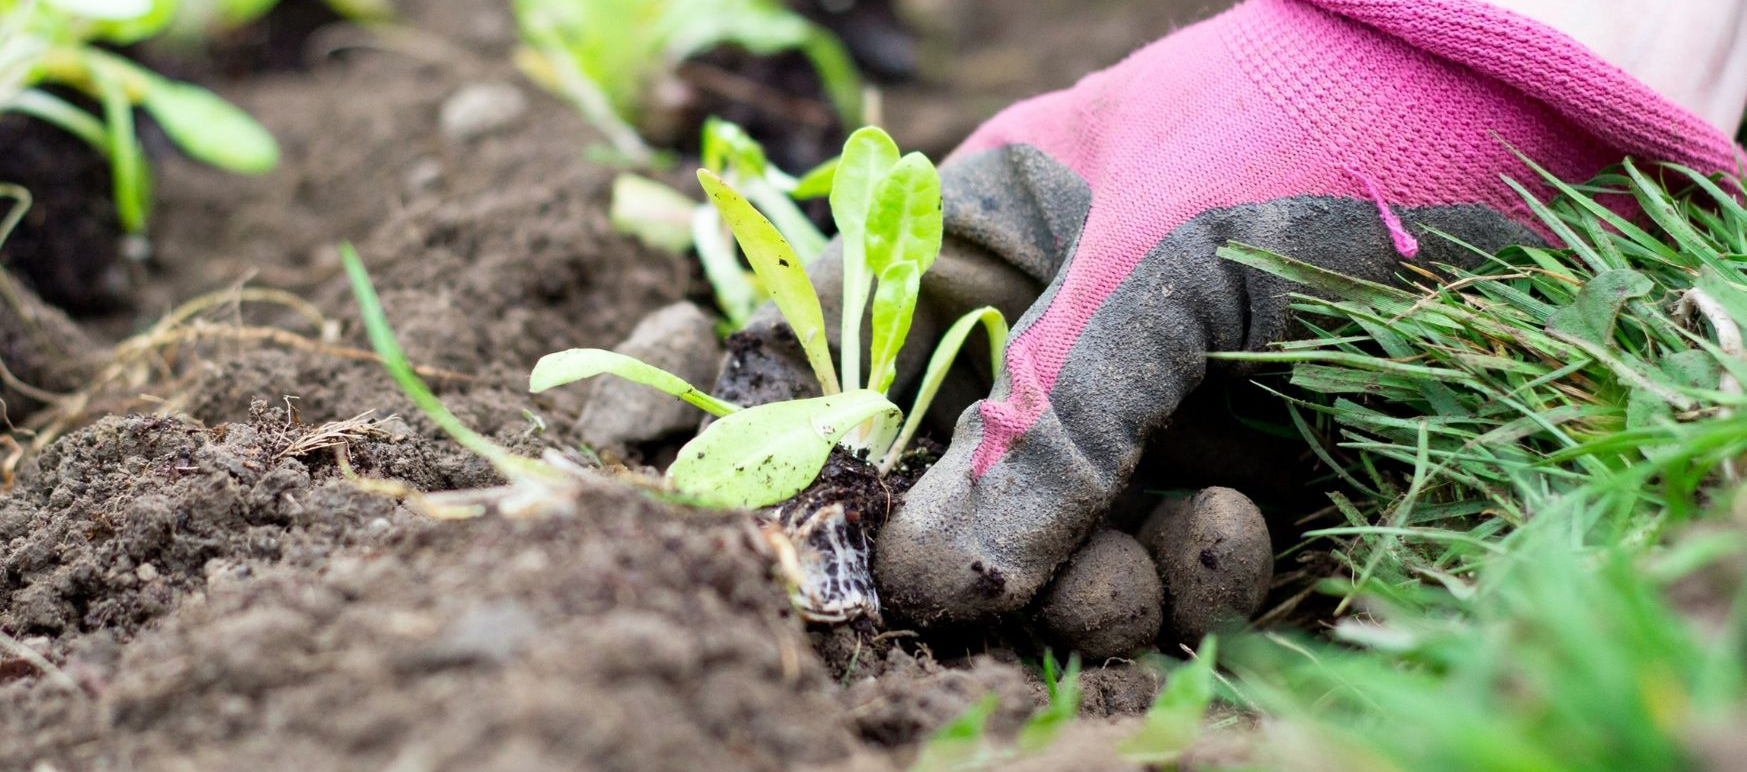 Funding application helps Wooroloo Connect Garden grow